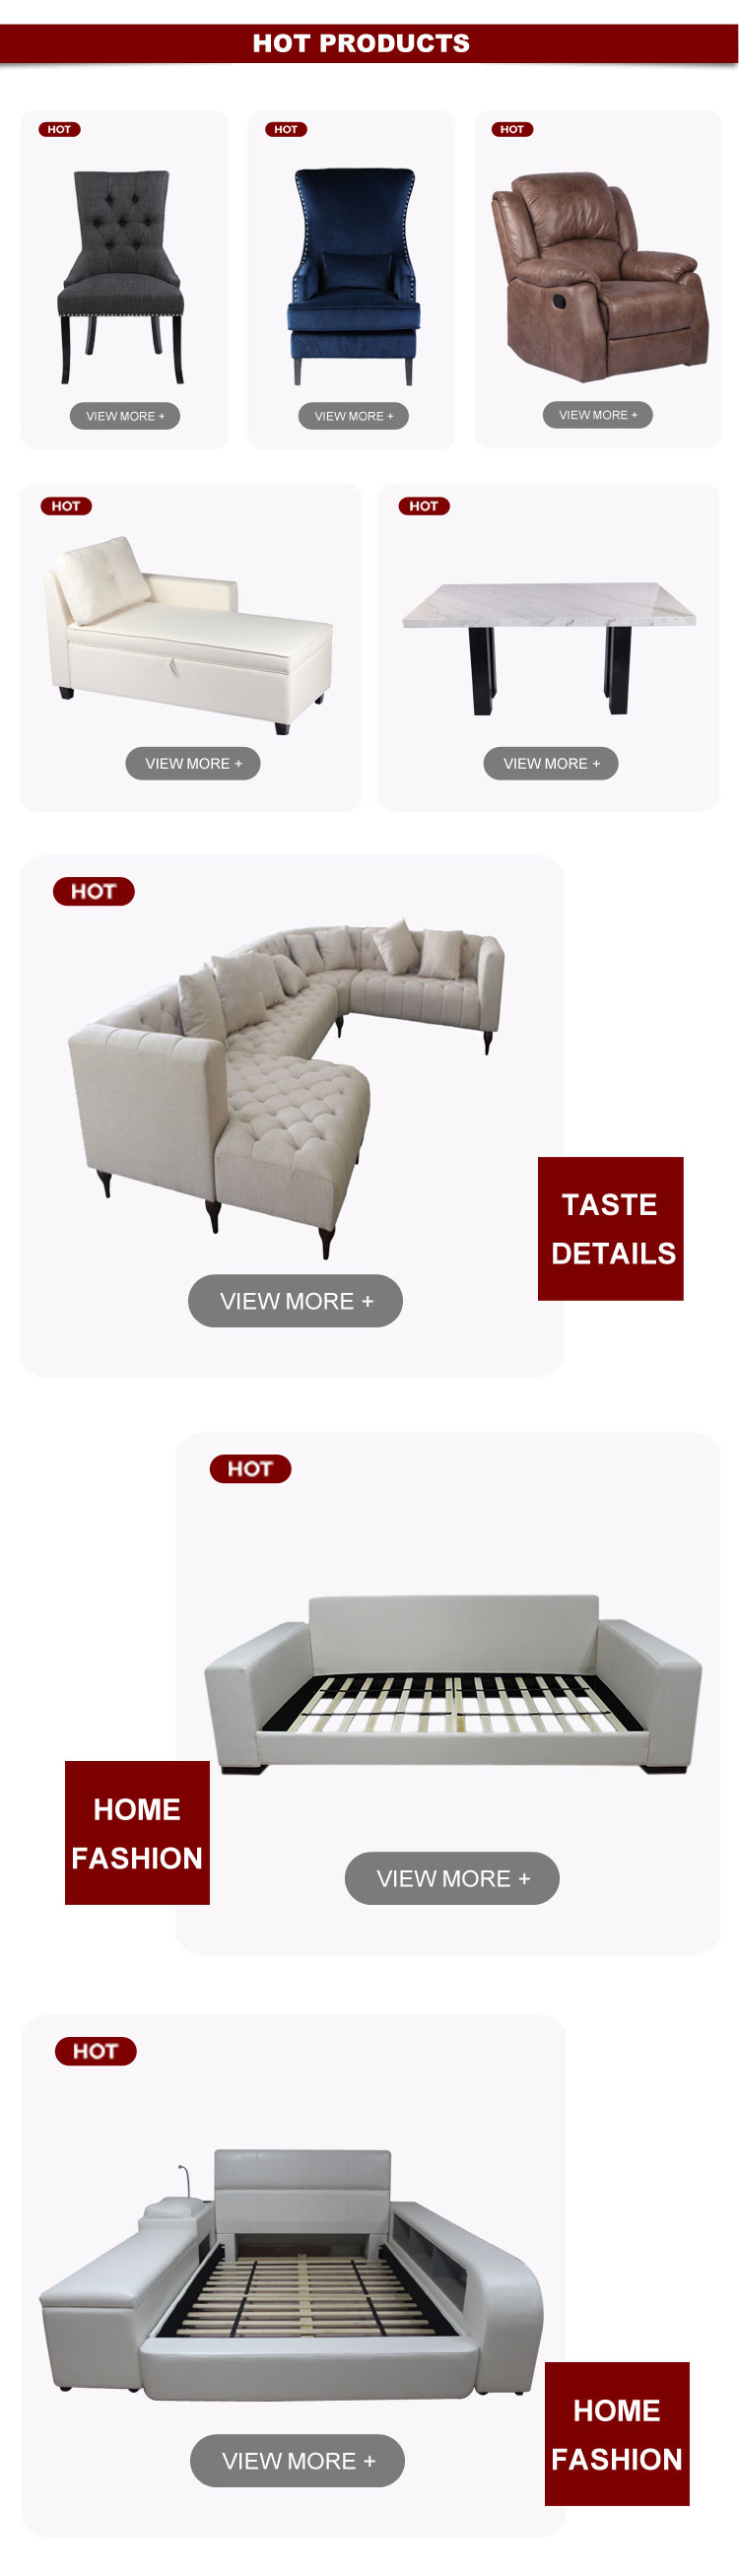 Kingbird Furniture Company Microfiber Couch Ashley Furniture-1 18